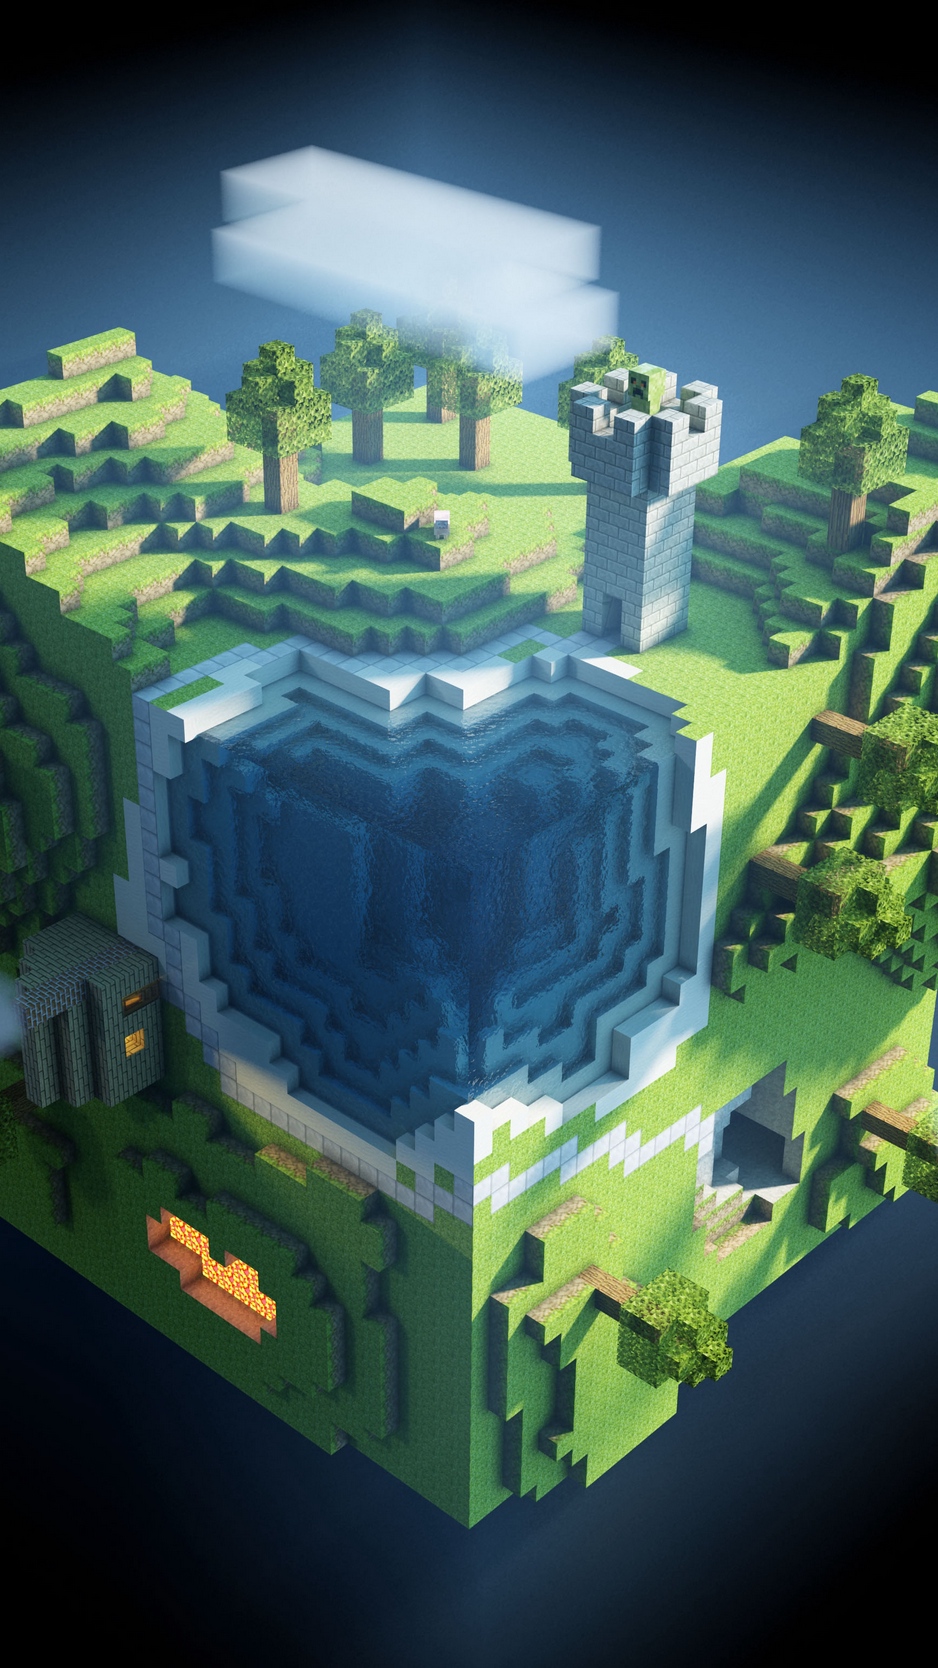 Download wallpaper 938x1668 minecraft planet cube cubes world